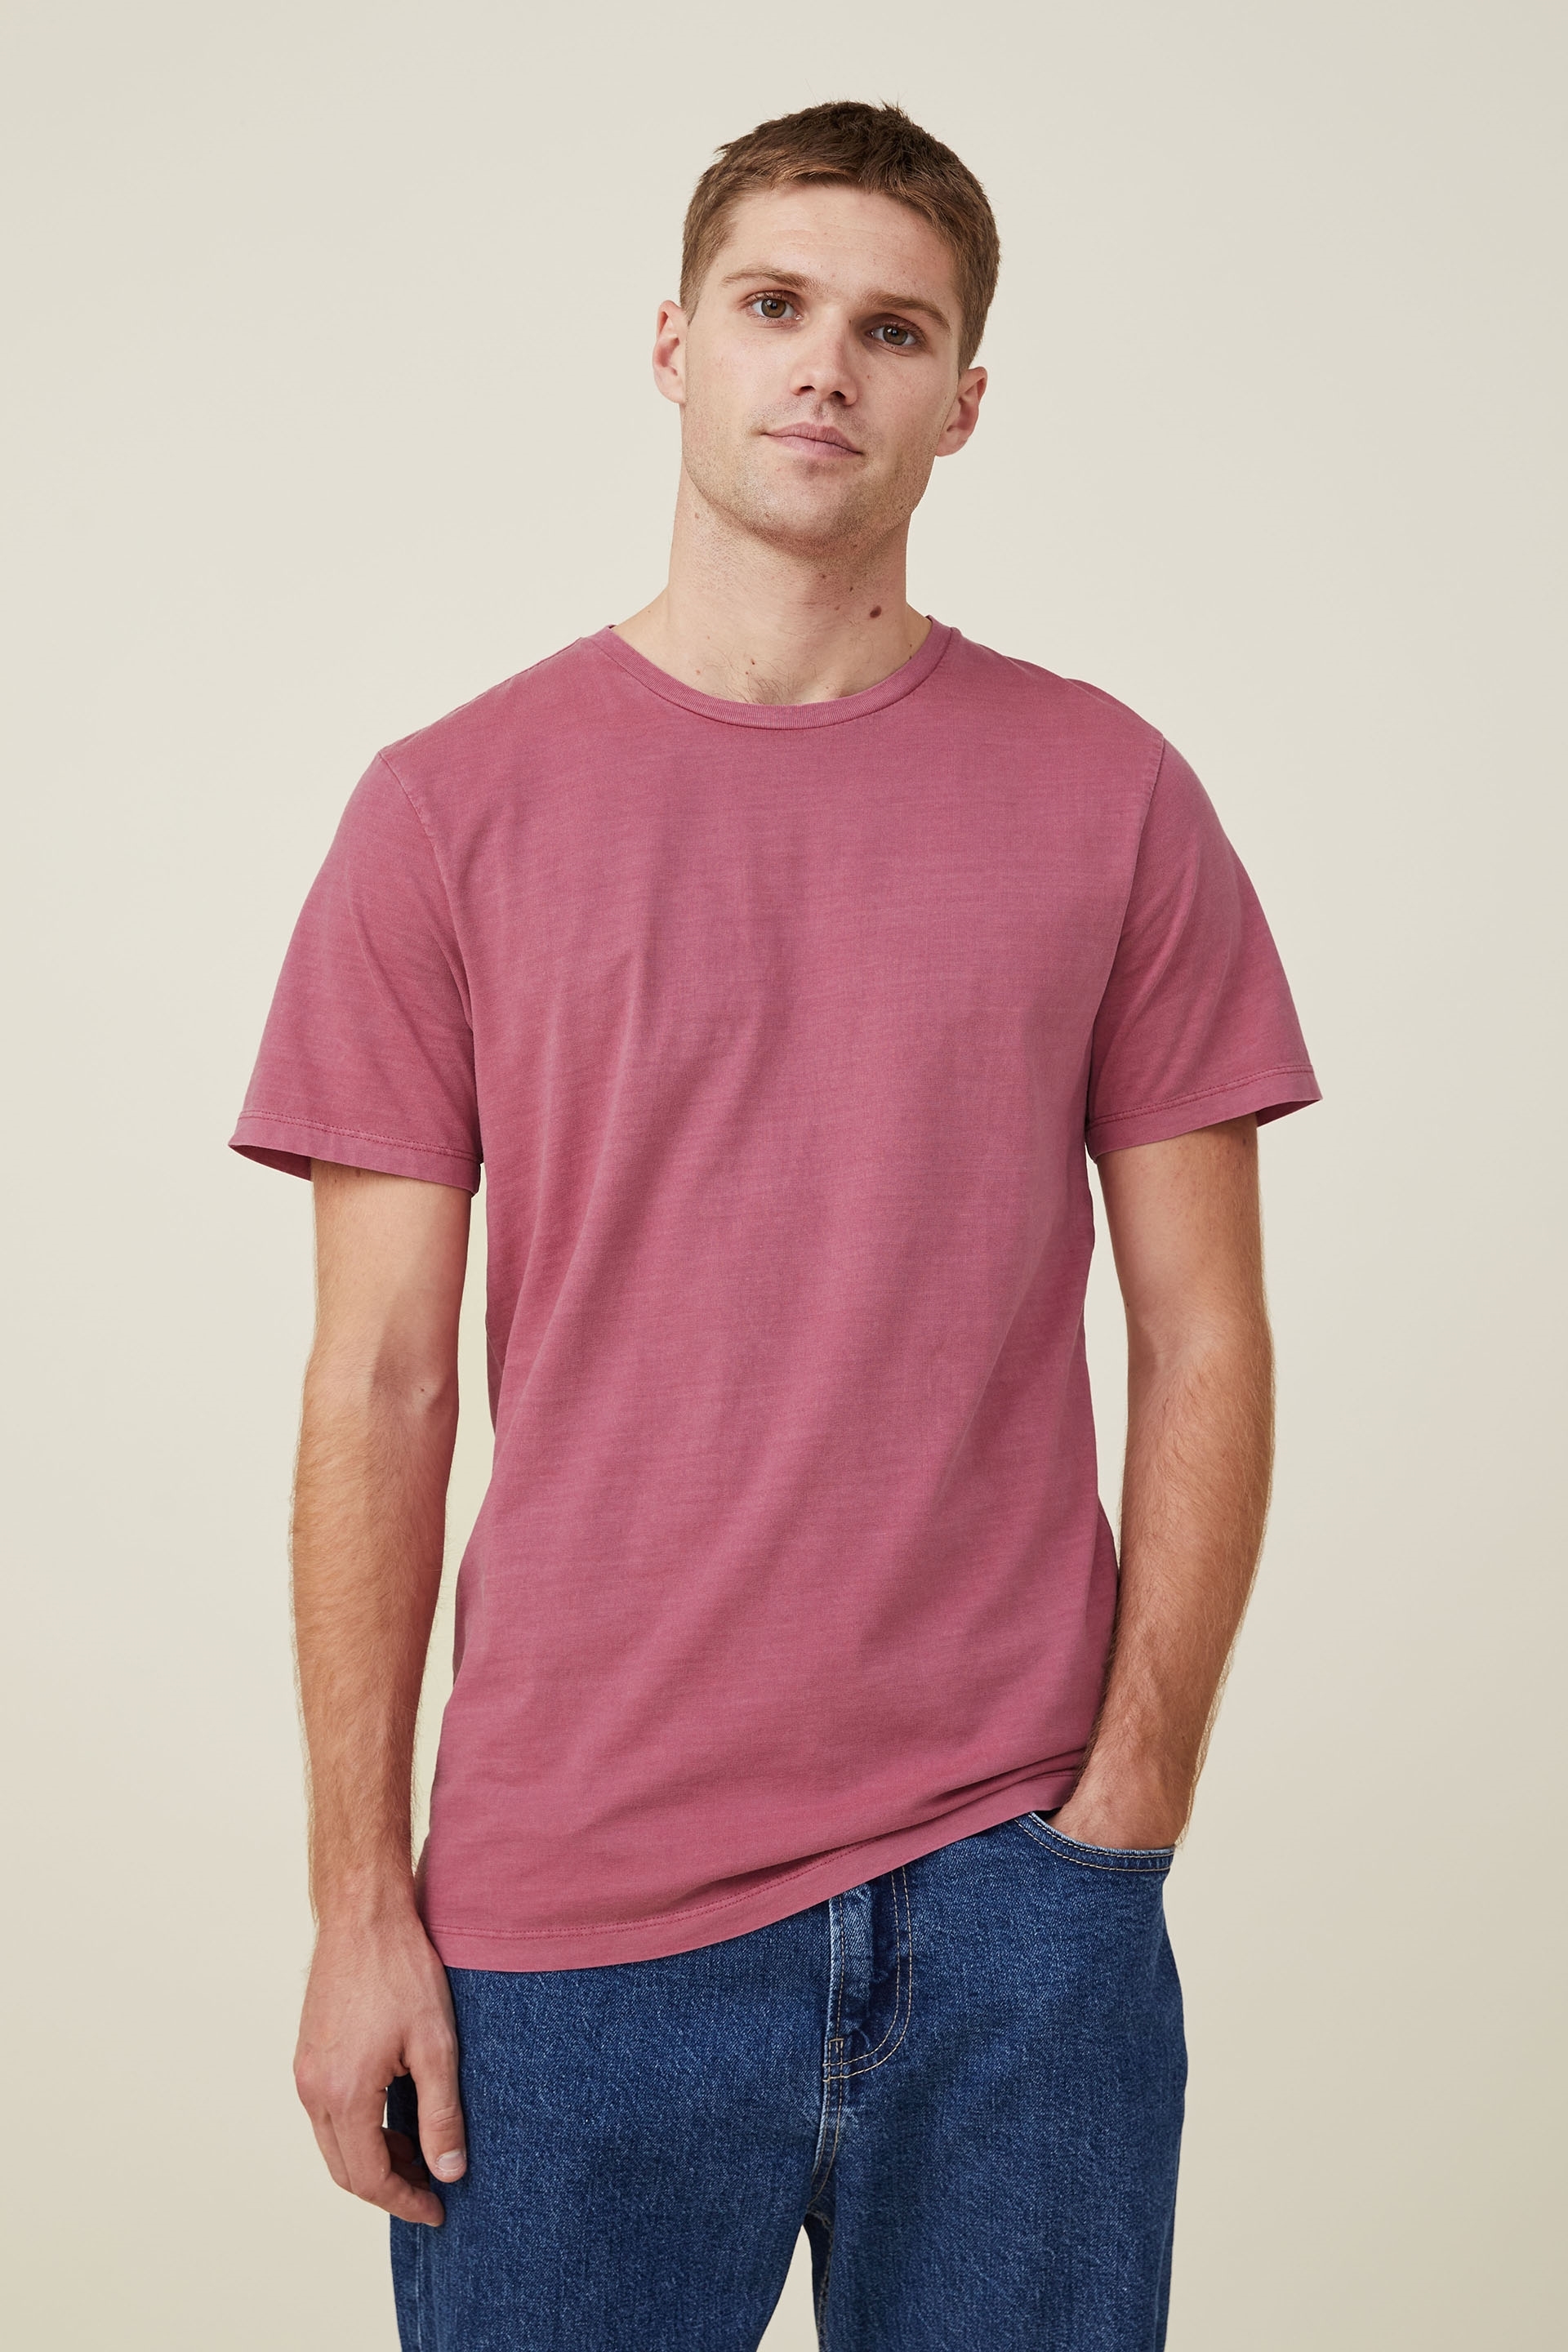 Cotton On Men - Organic Regular Fit Crew T-Shirt - Raspberry